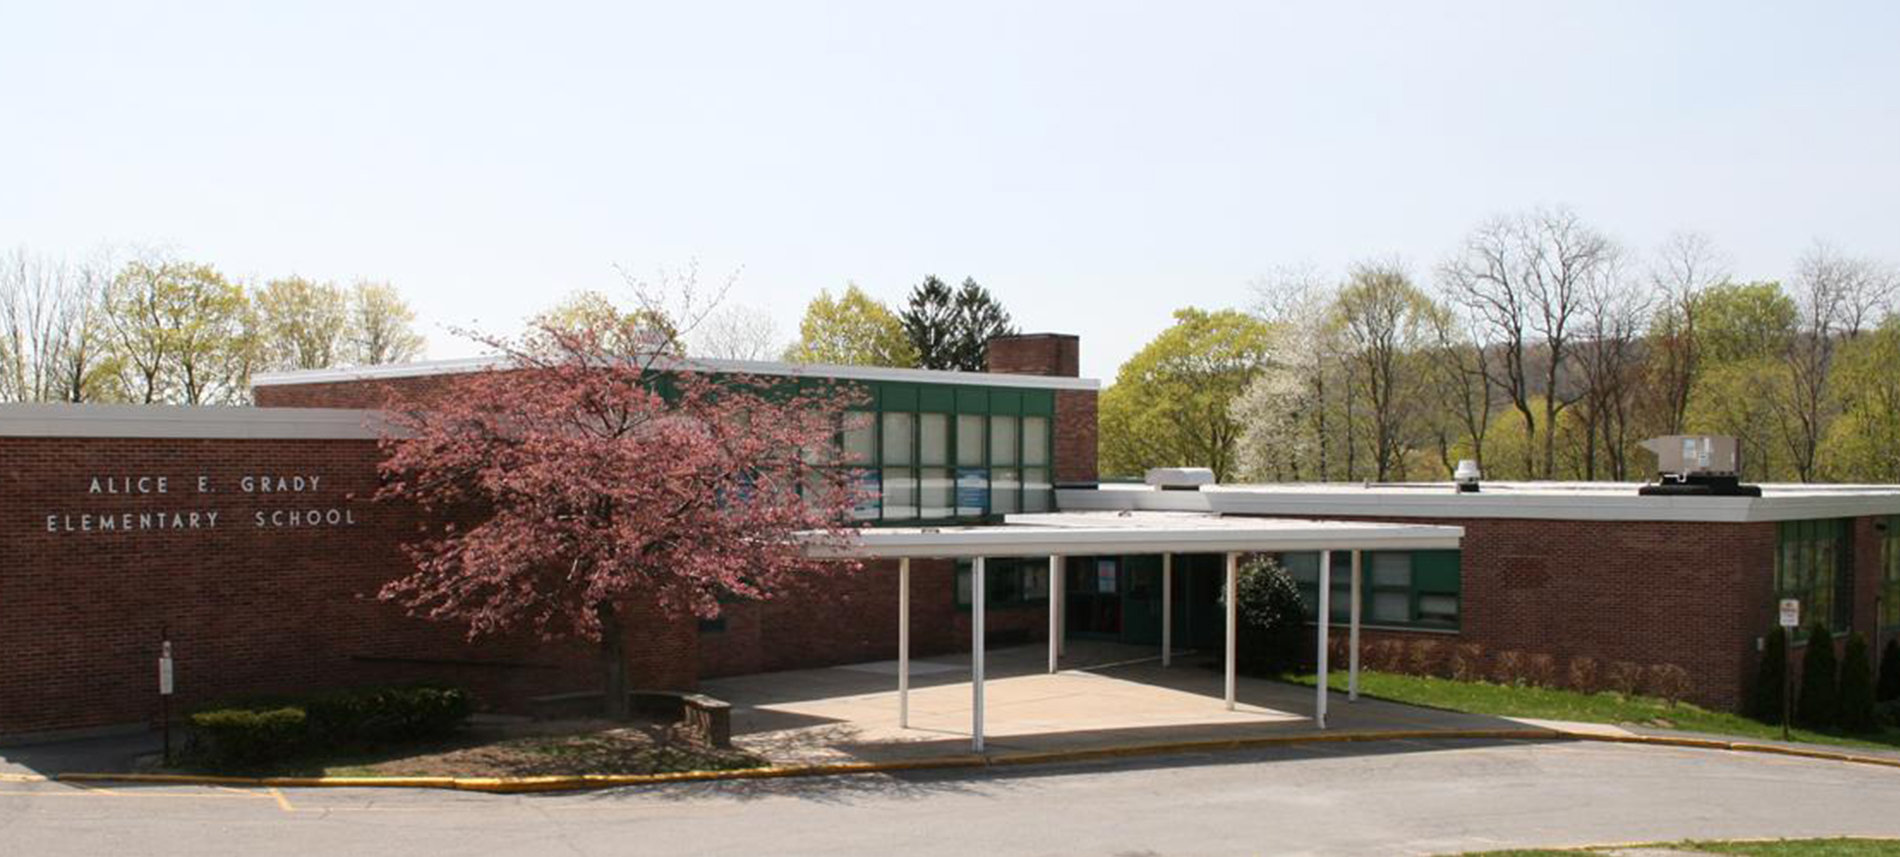 Alice E. Grady Elementary School